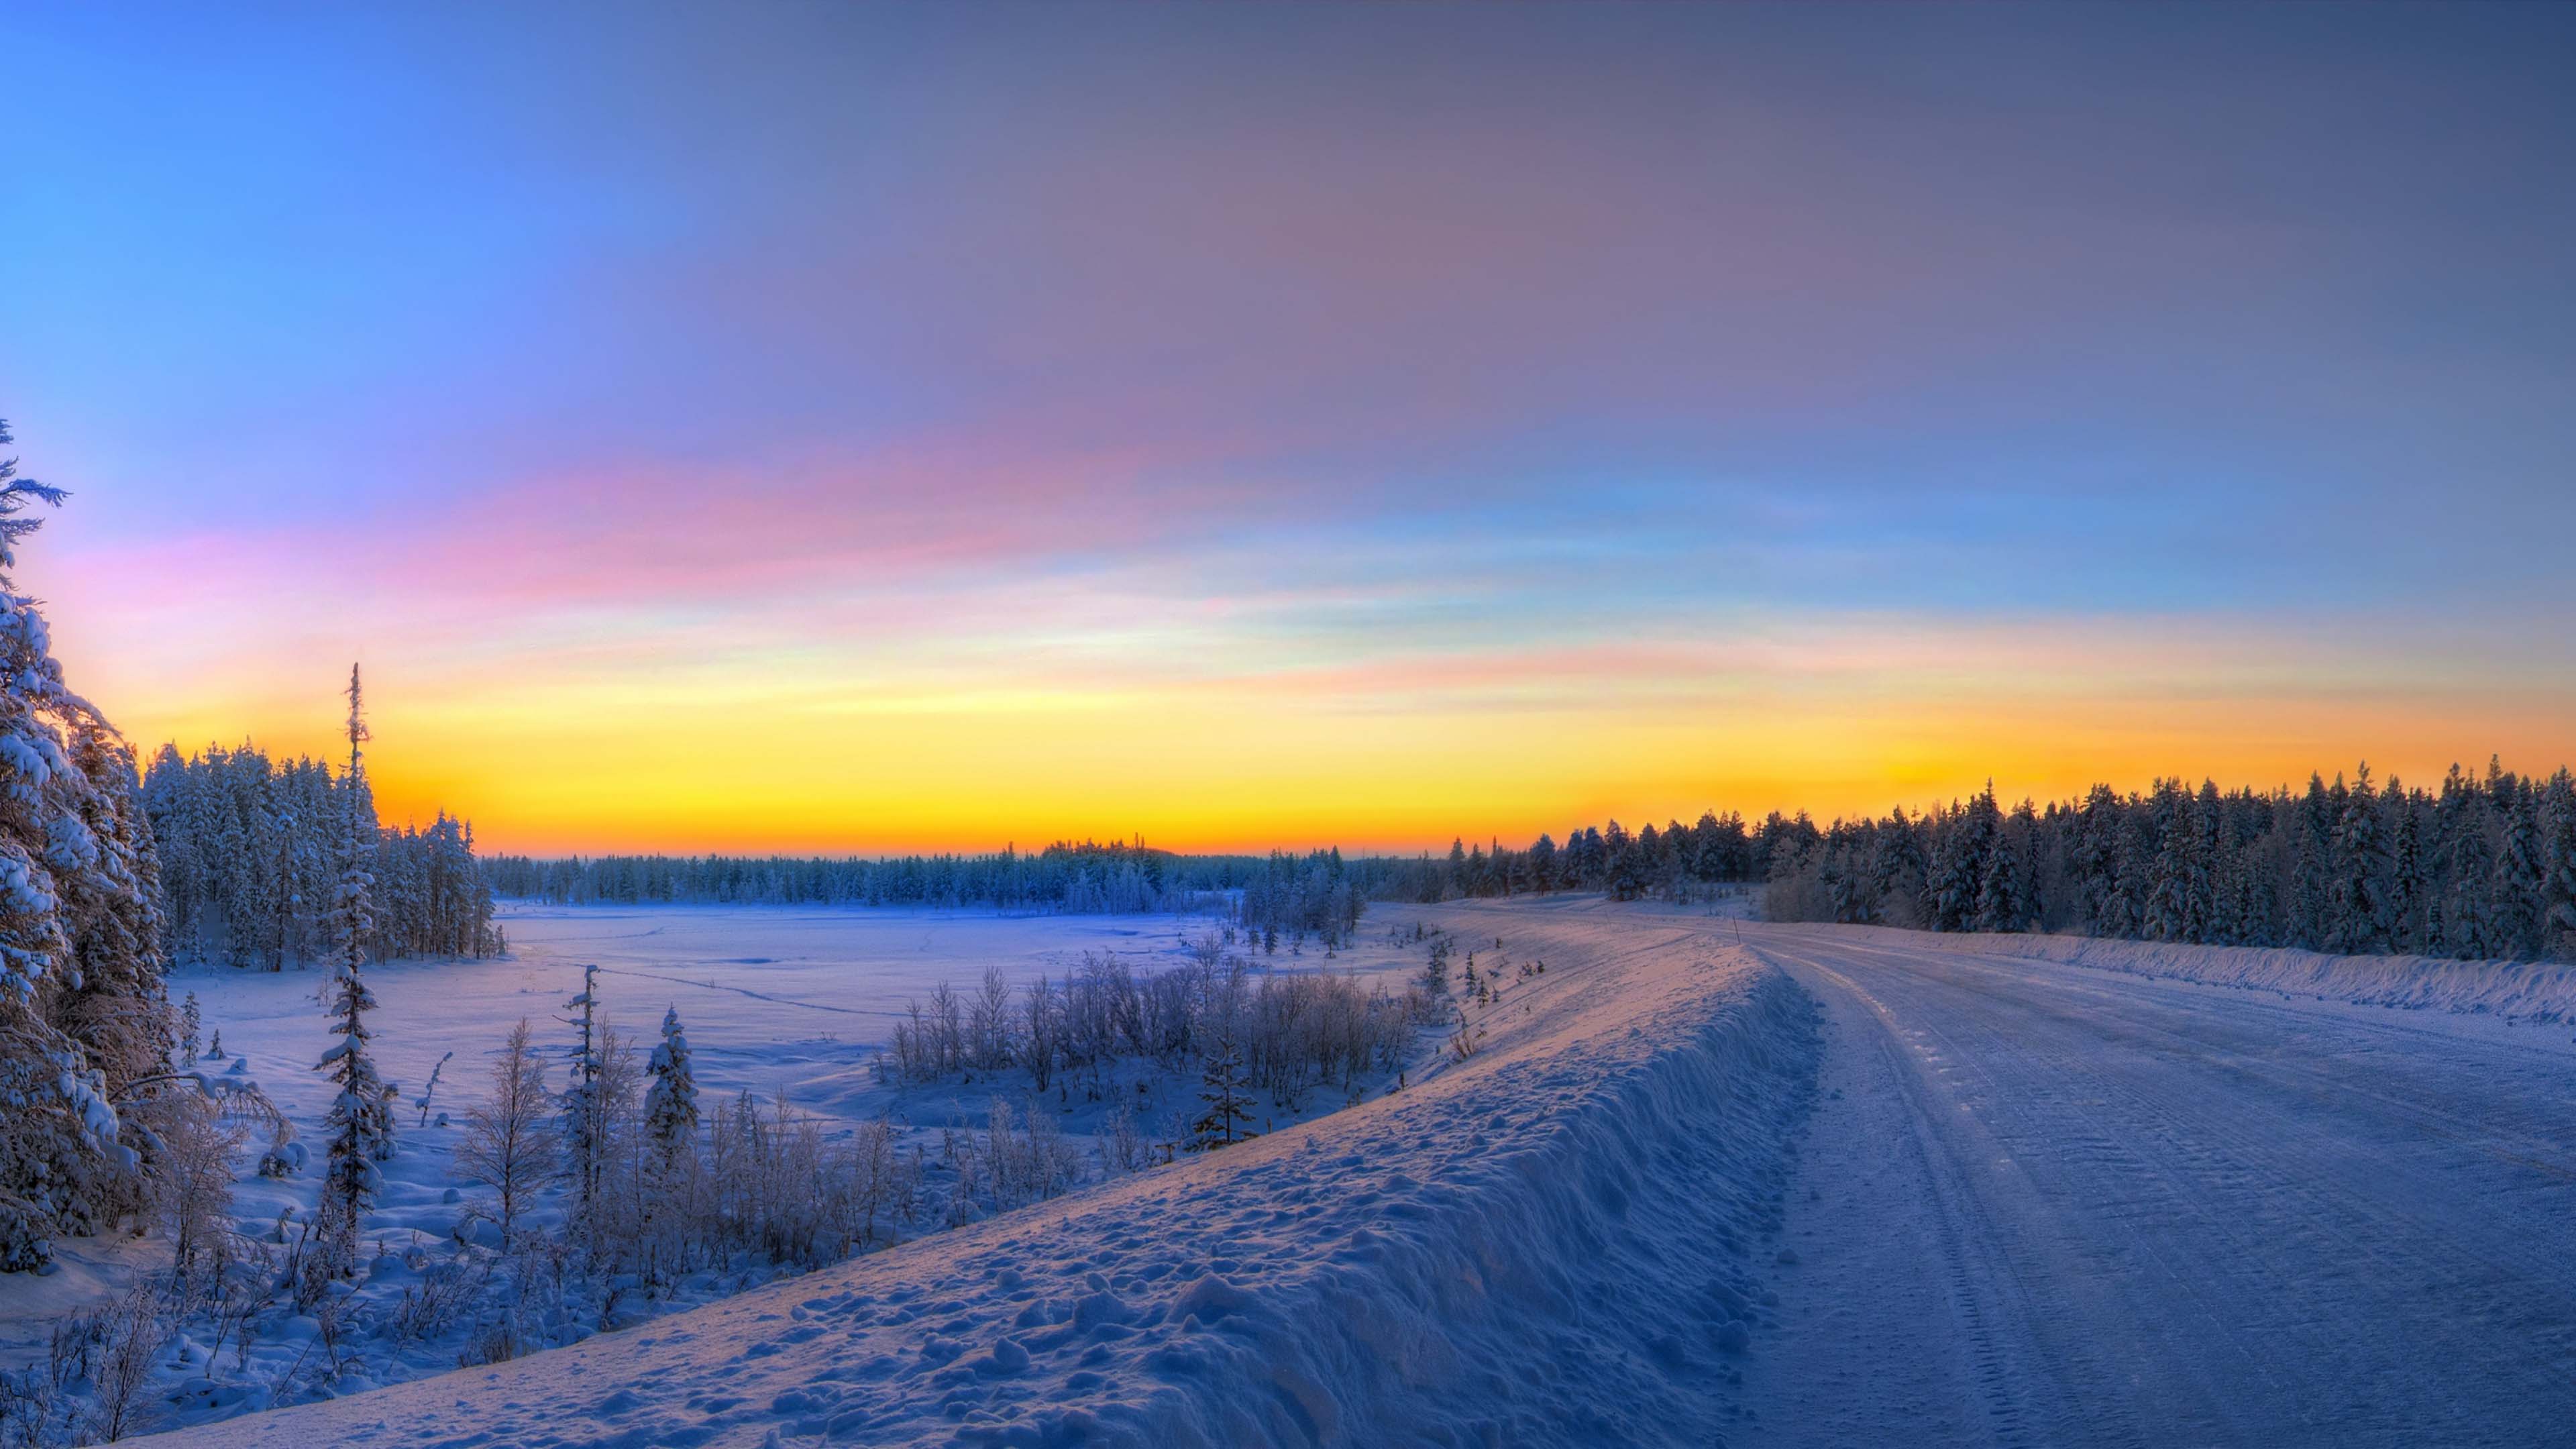 macbook pro 2016 wallpaper,sky,winter,snow,nature,natural landscape